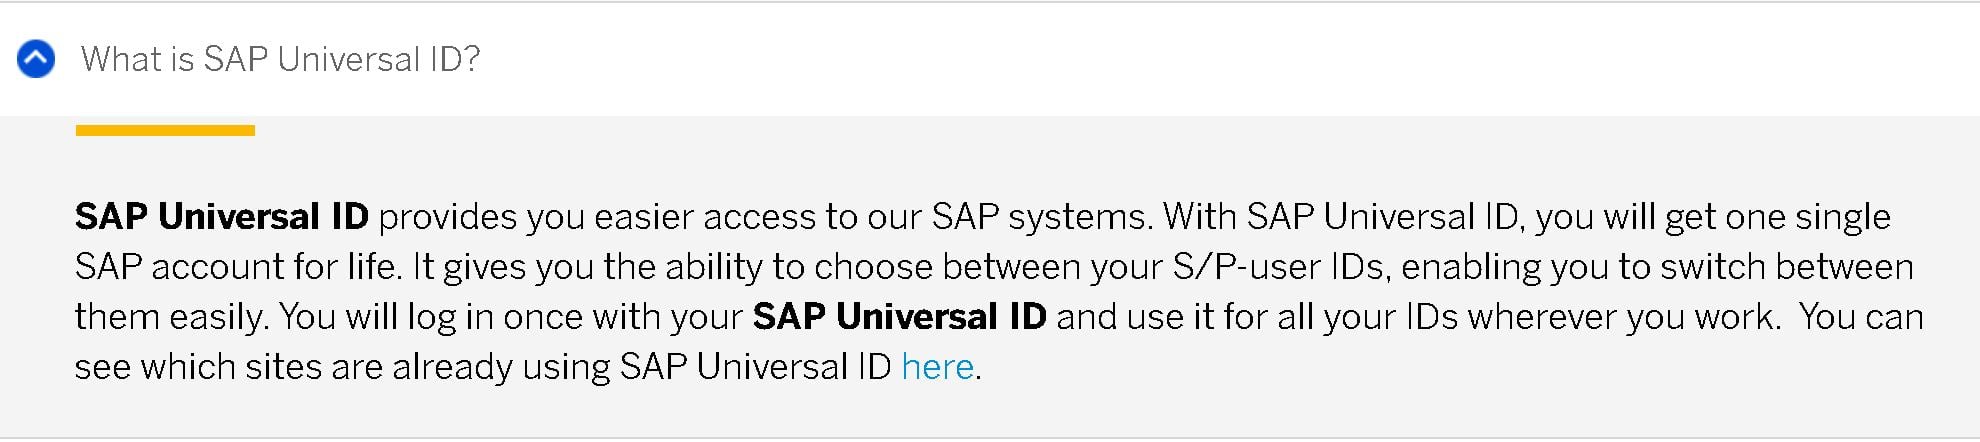 SAP Universal ID